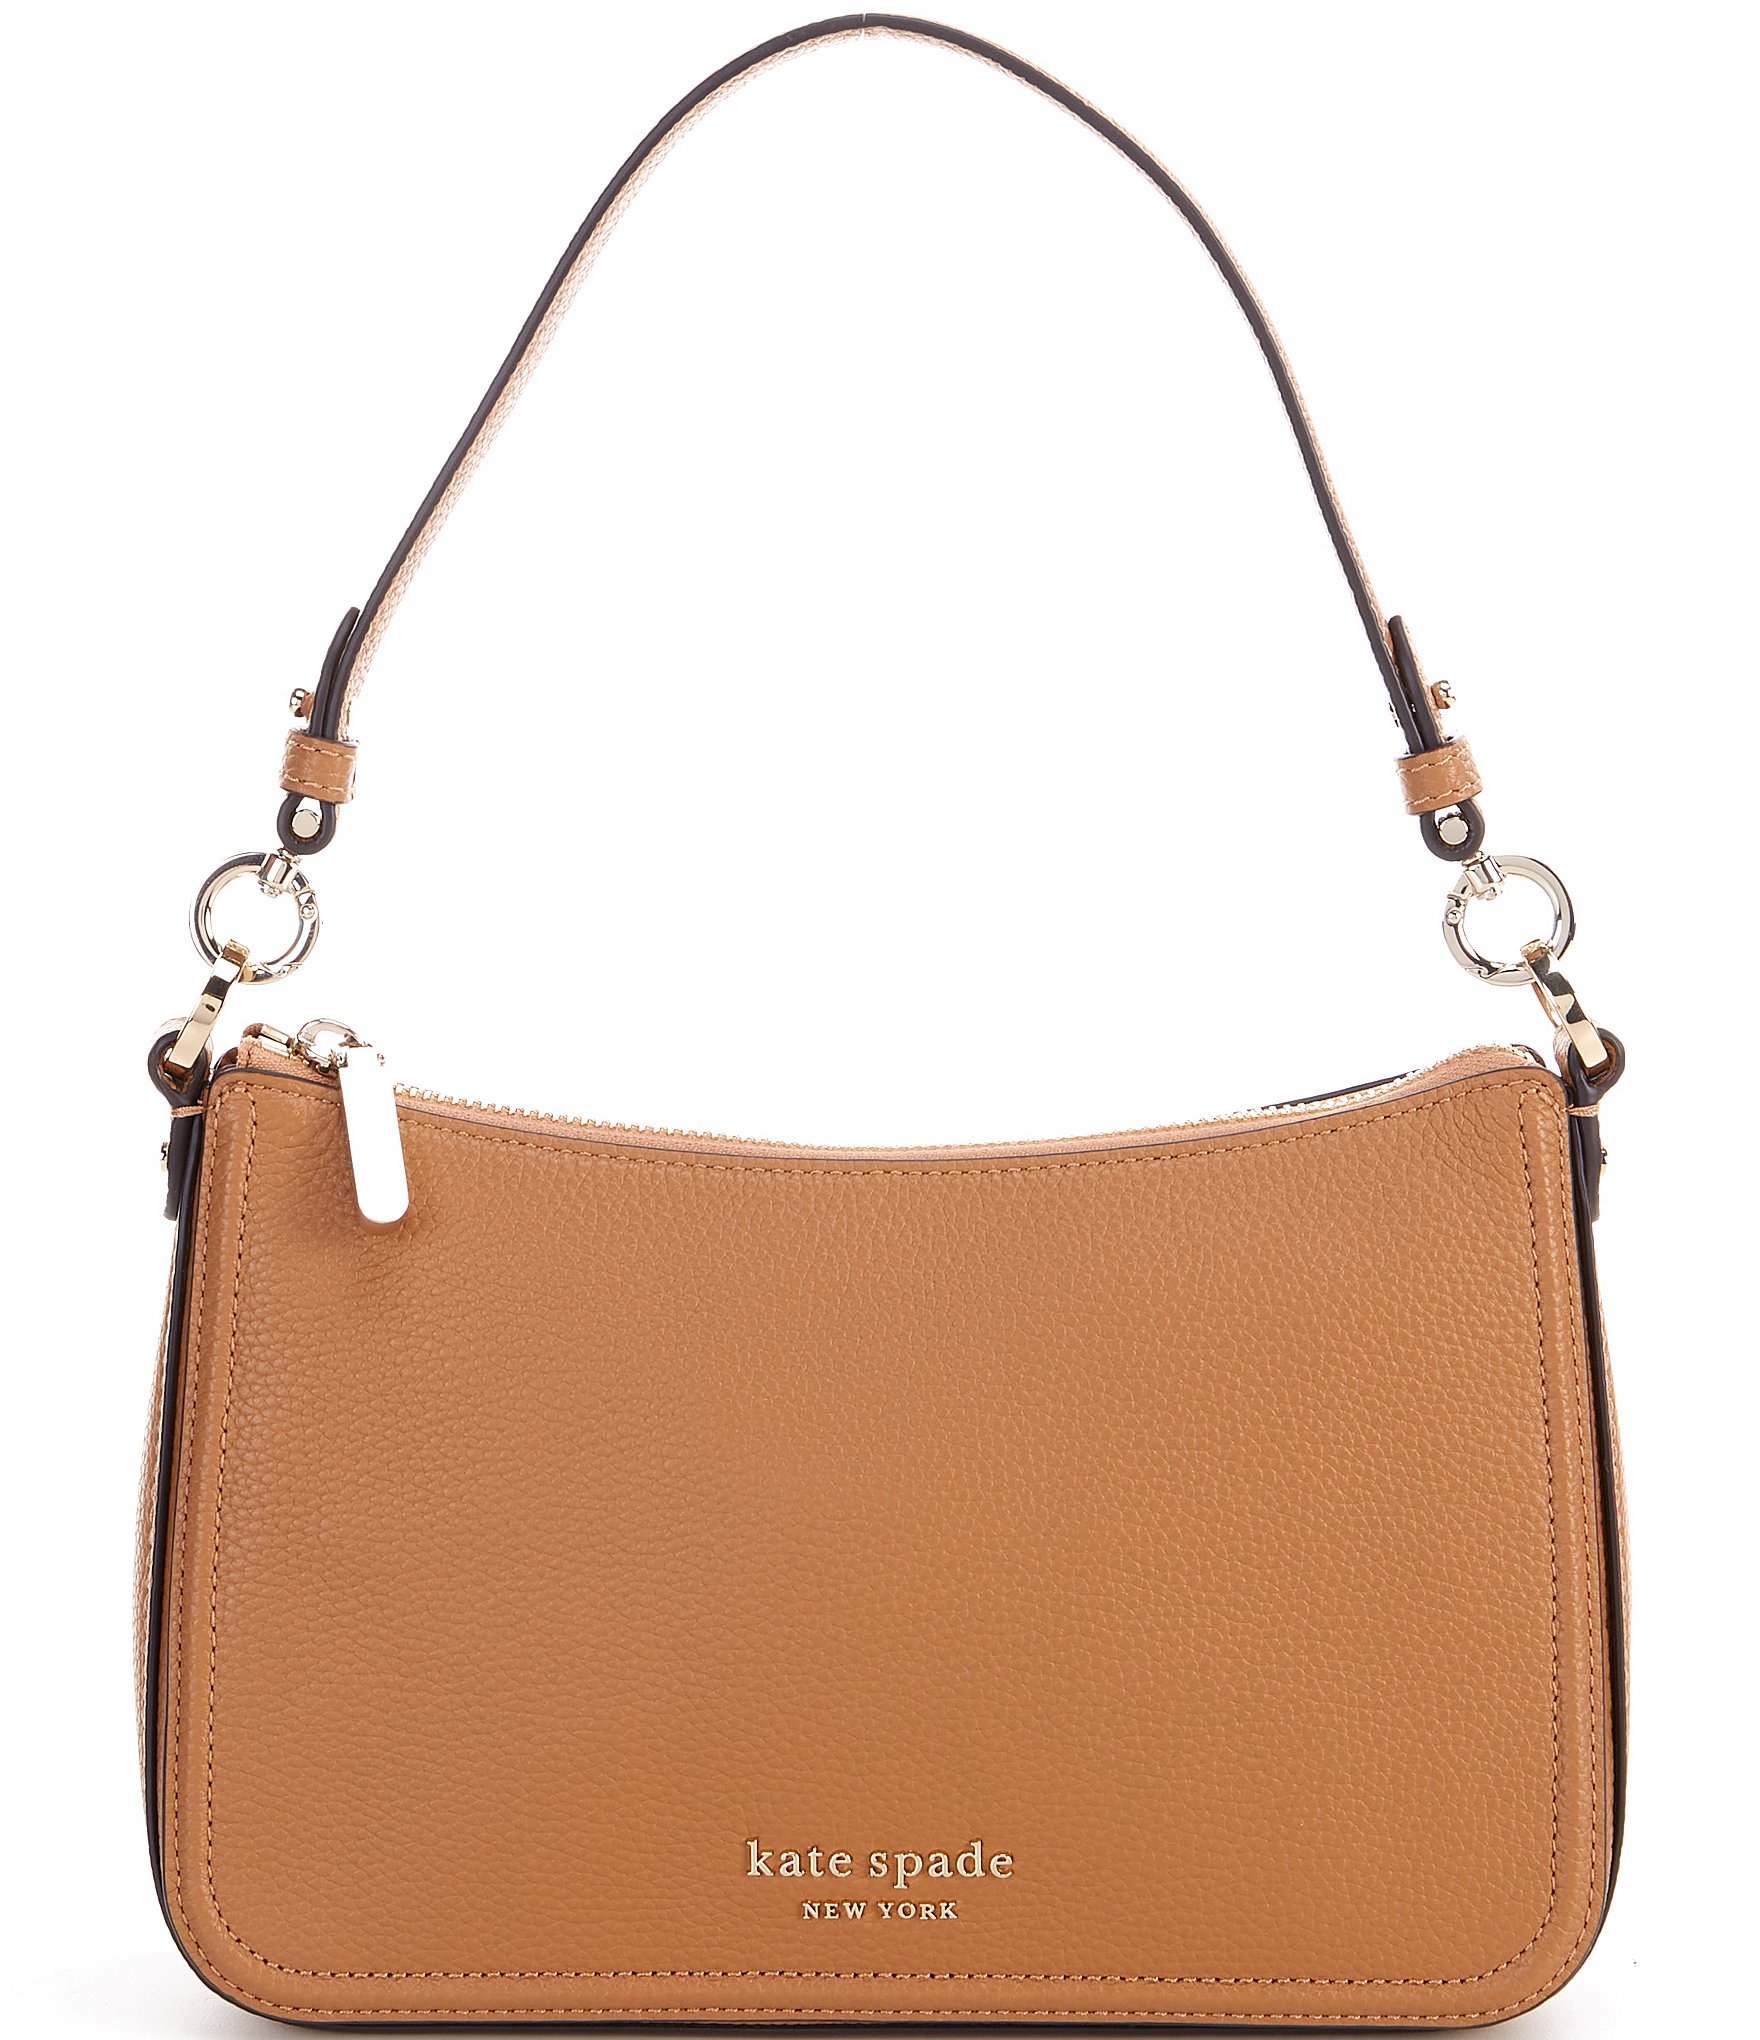 kate spade new york Brown Handbags, Purses & Wallets | Dillard's